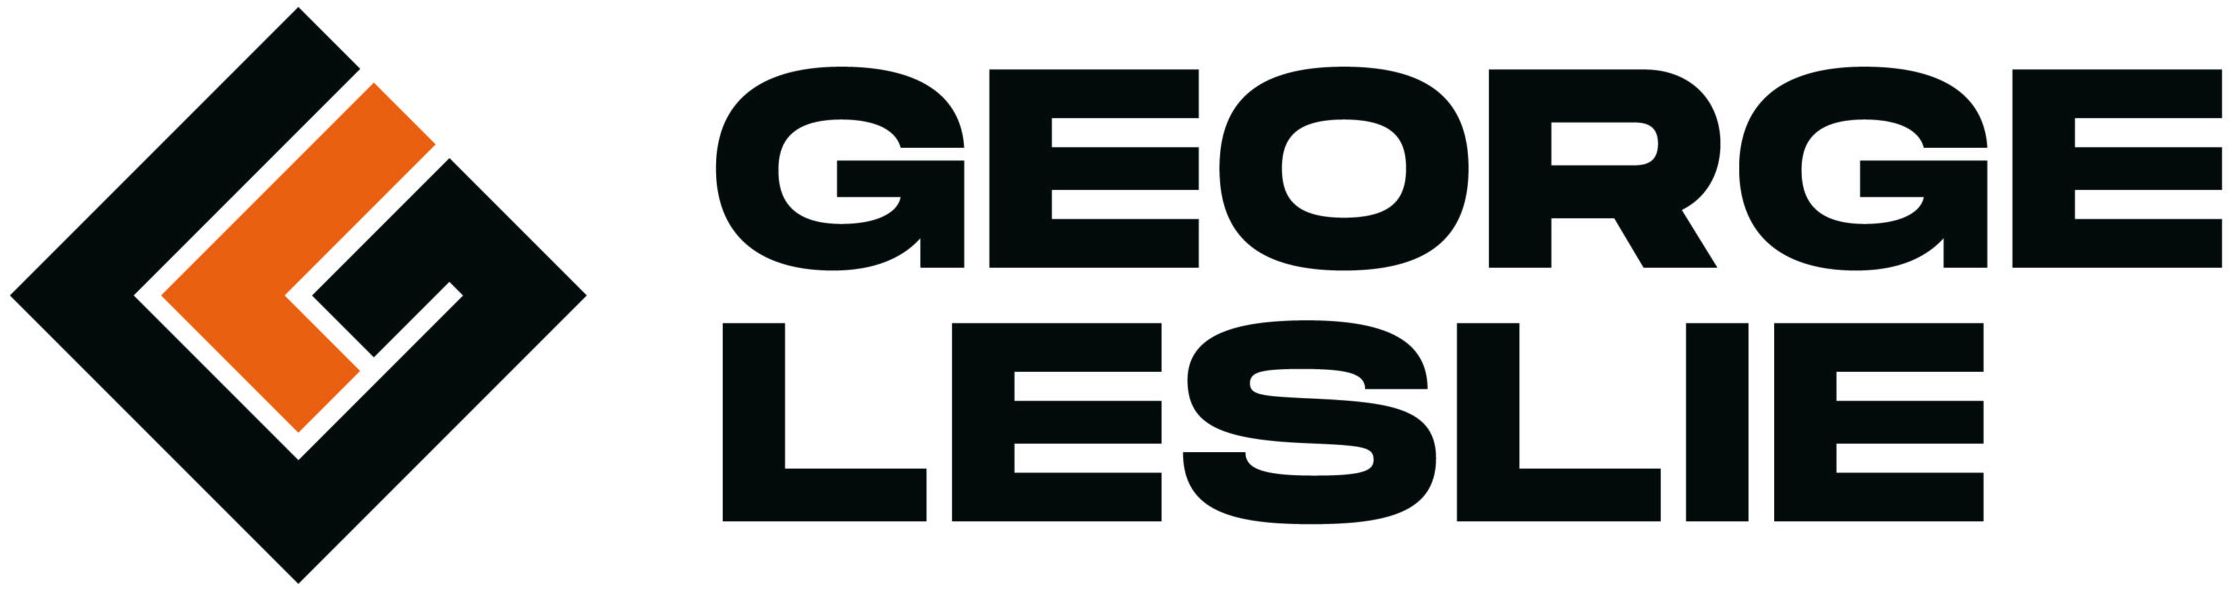 George Leslie